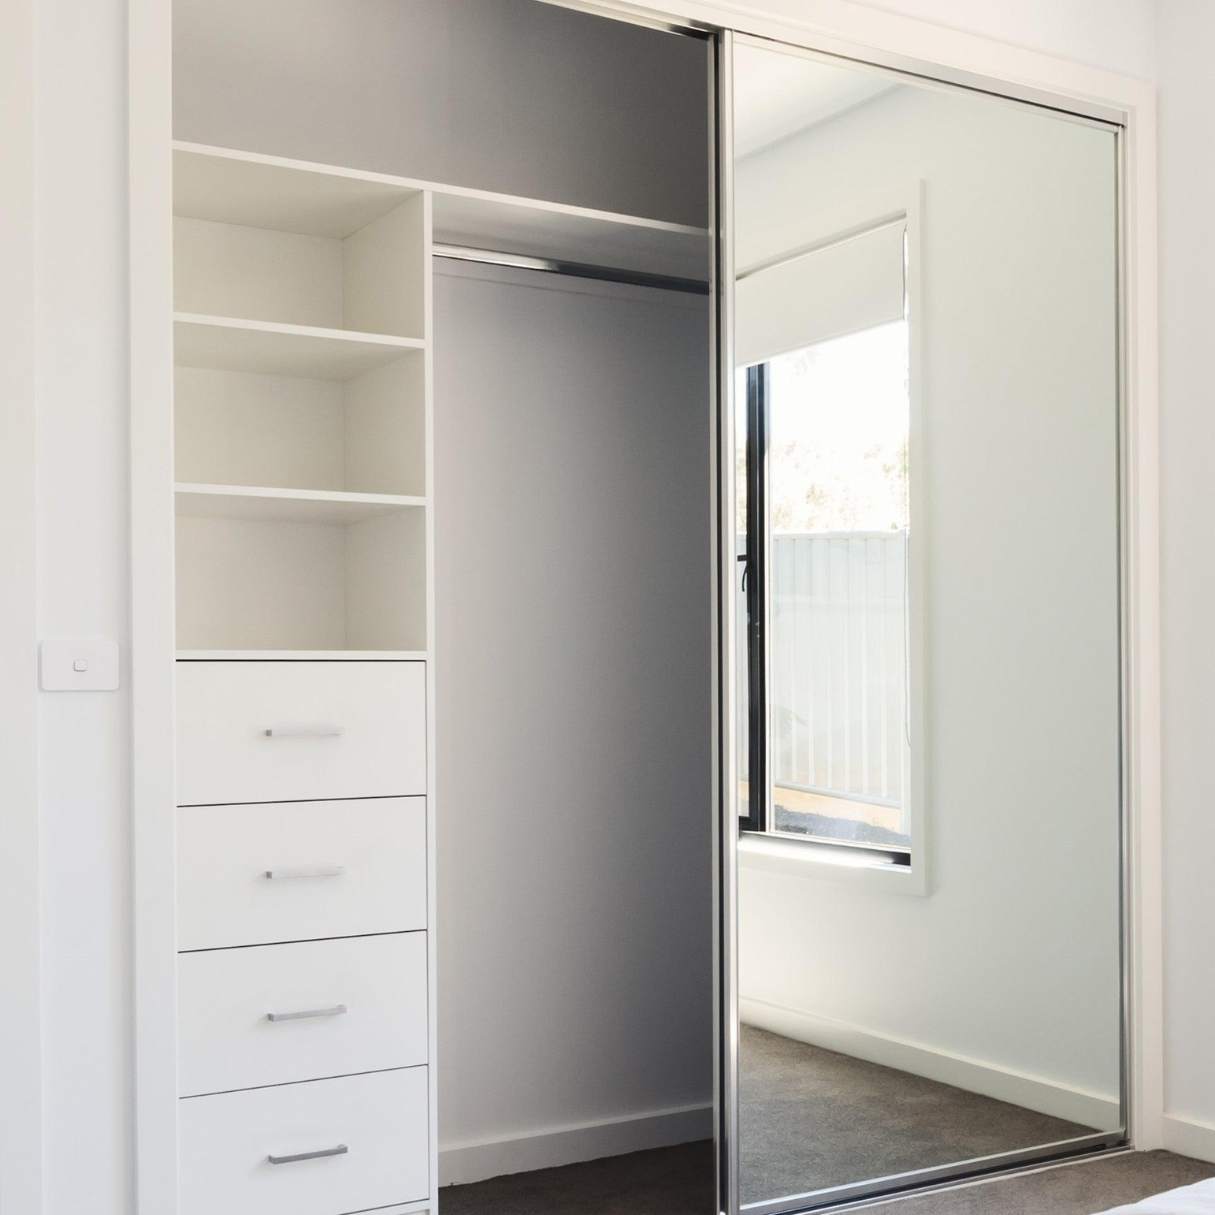 How To Put Mirrors On Sliding Closet Doors